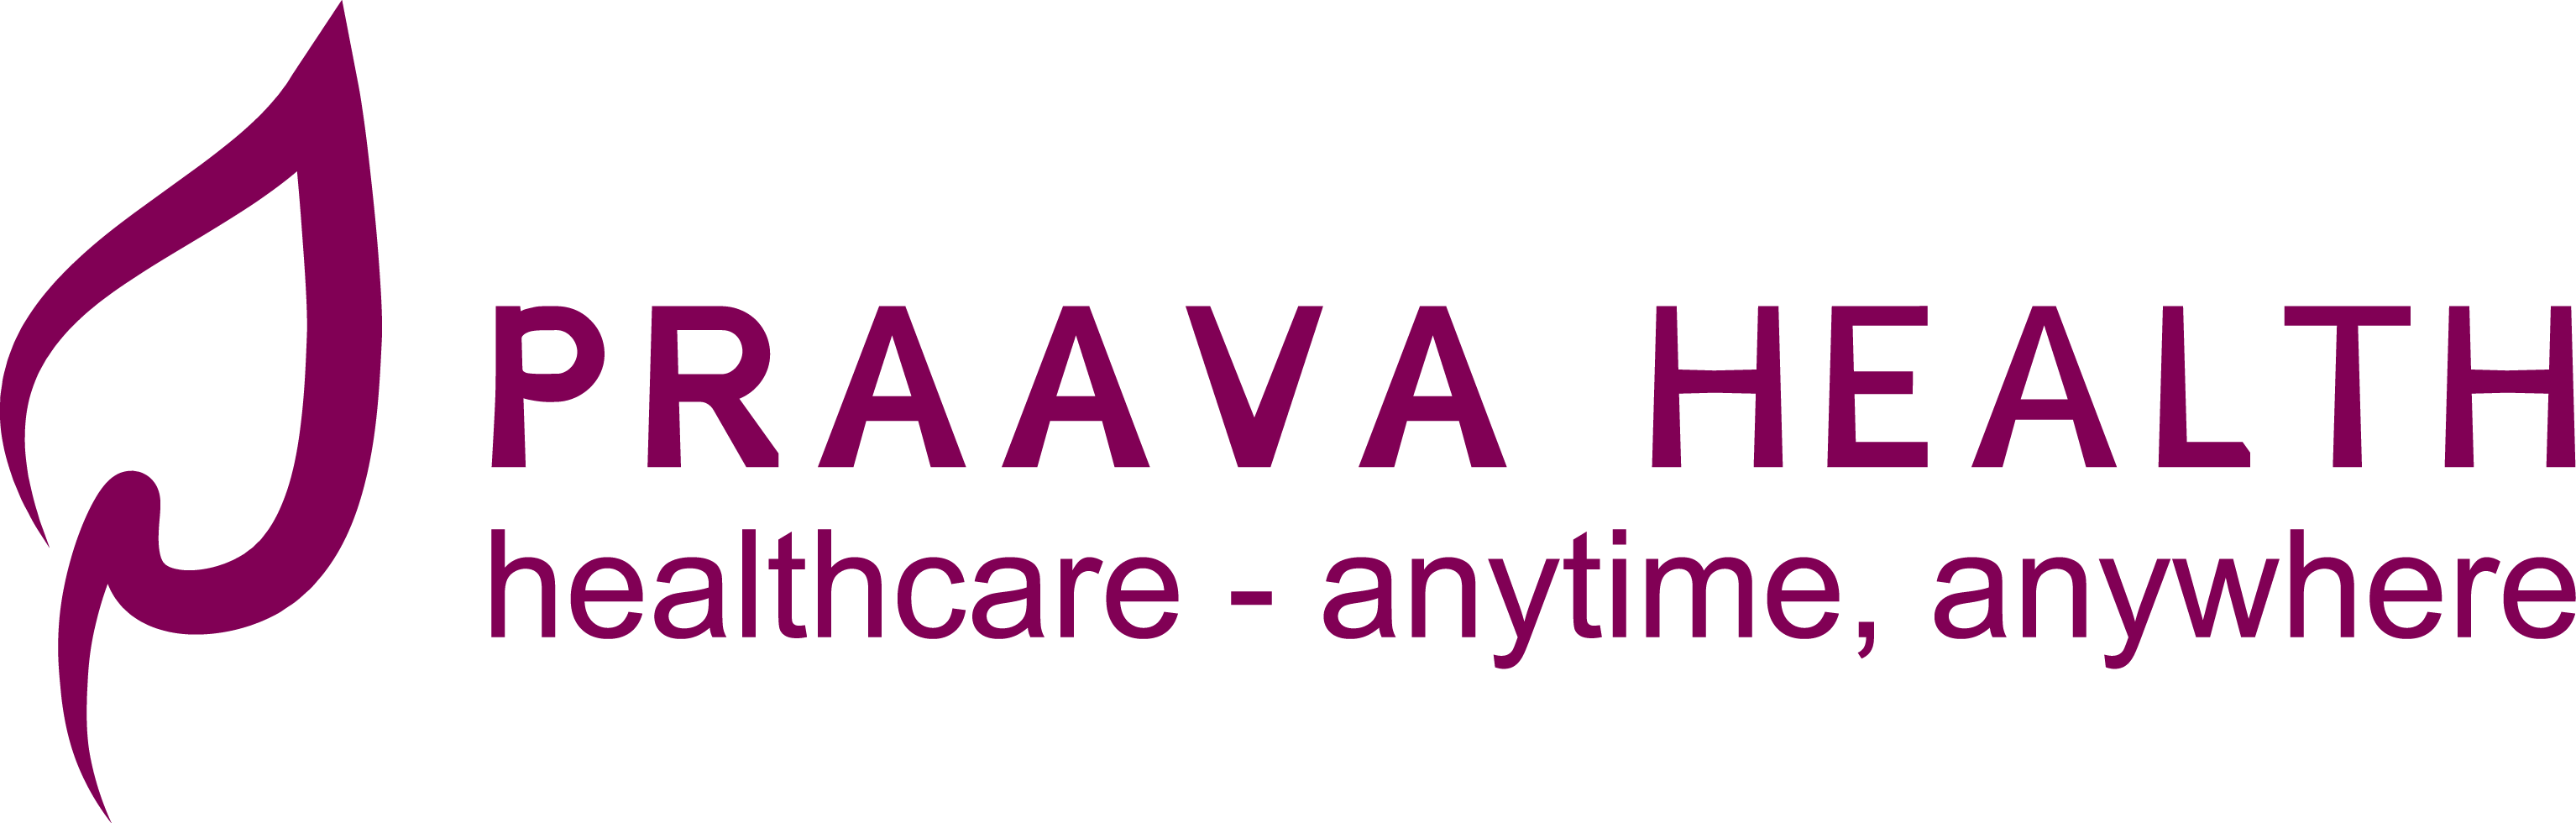 praava health logo